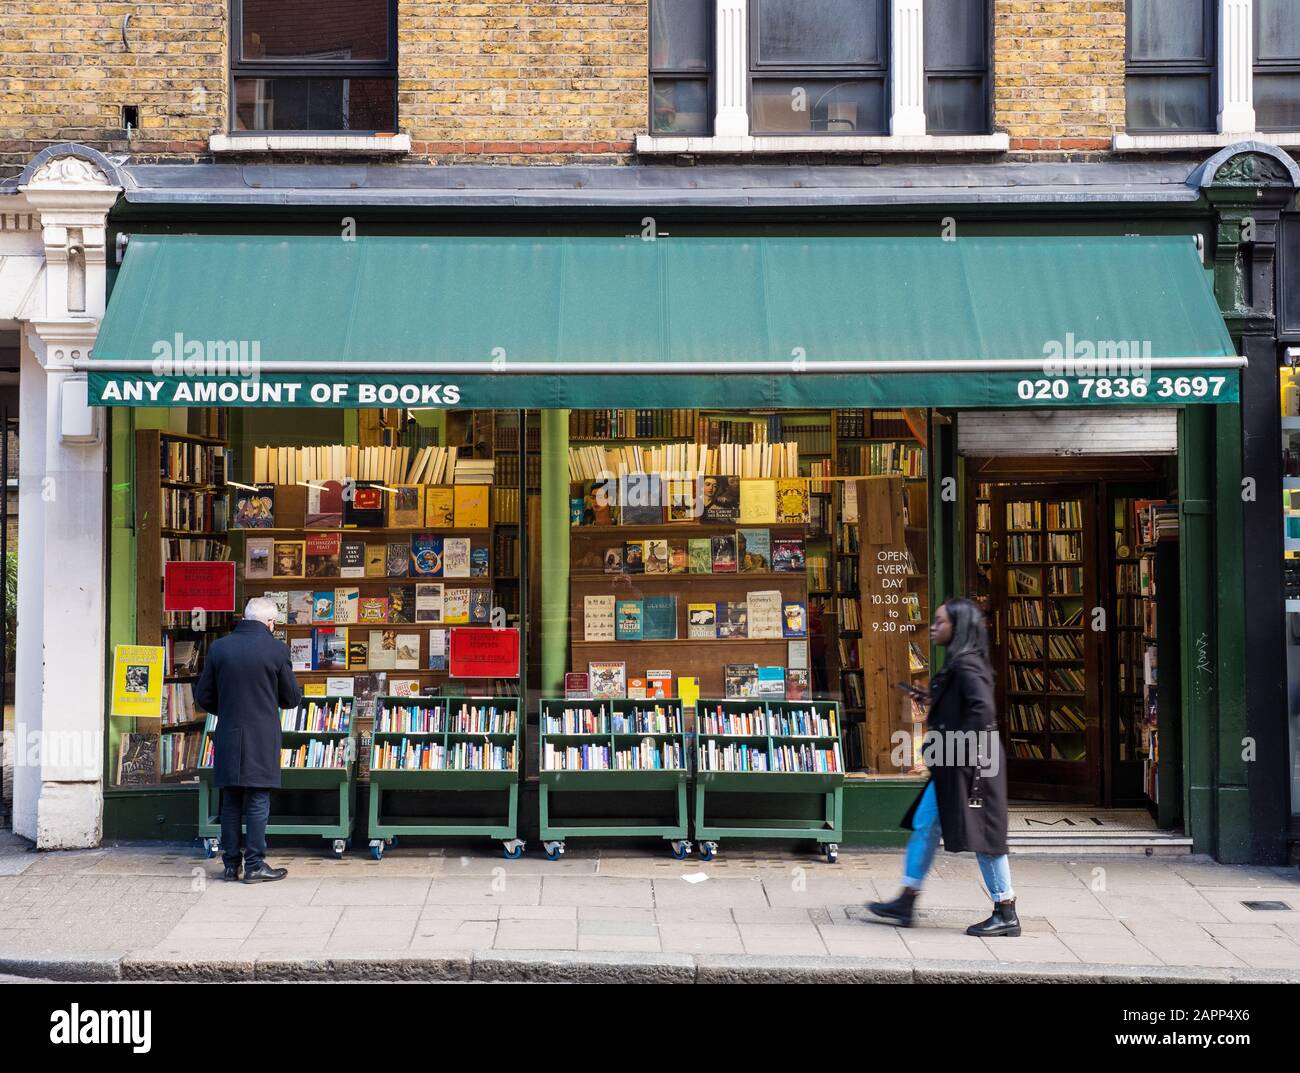 Any Amount of Books, Charing cross Road, London, England, UK, GB. Stock Photo